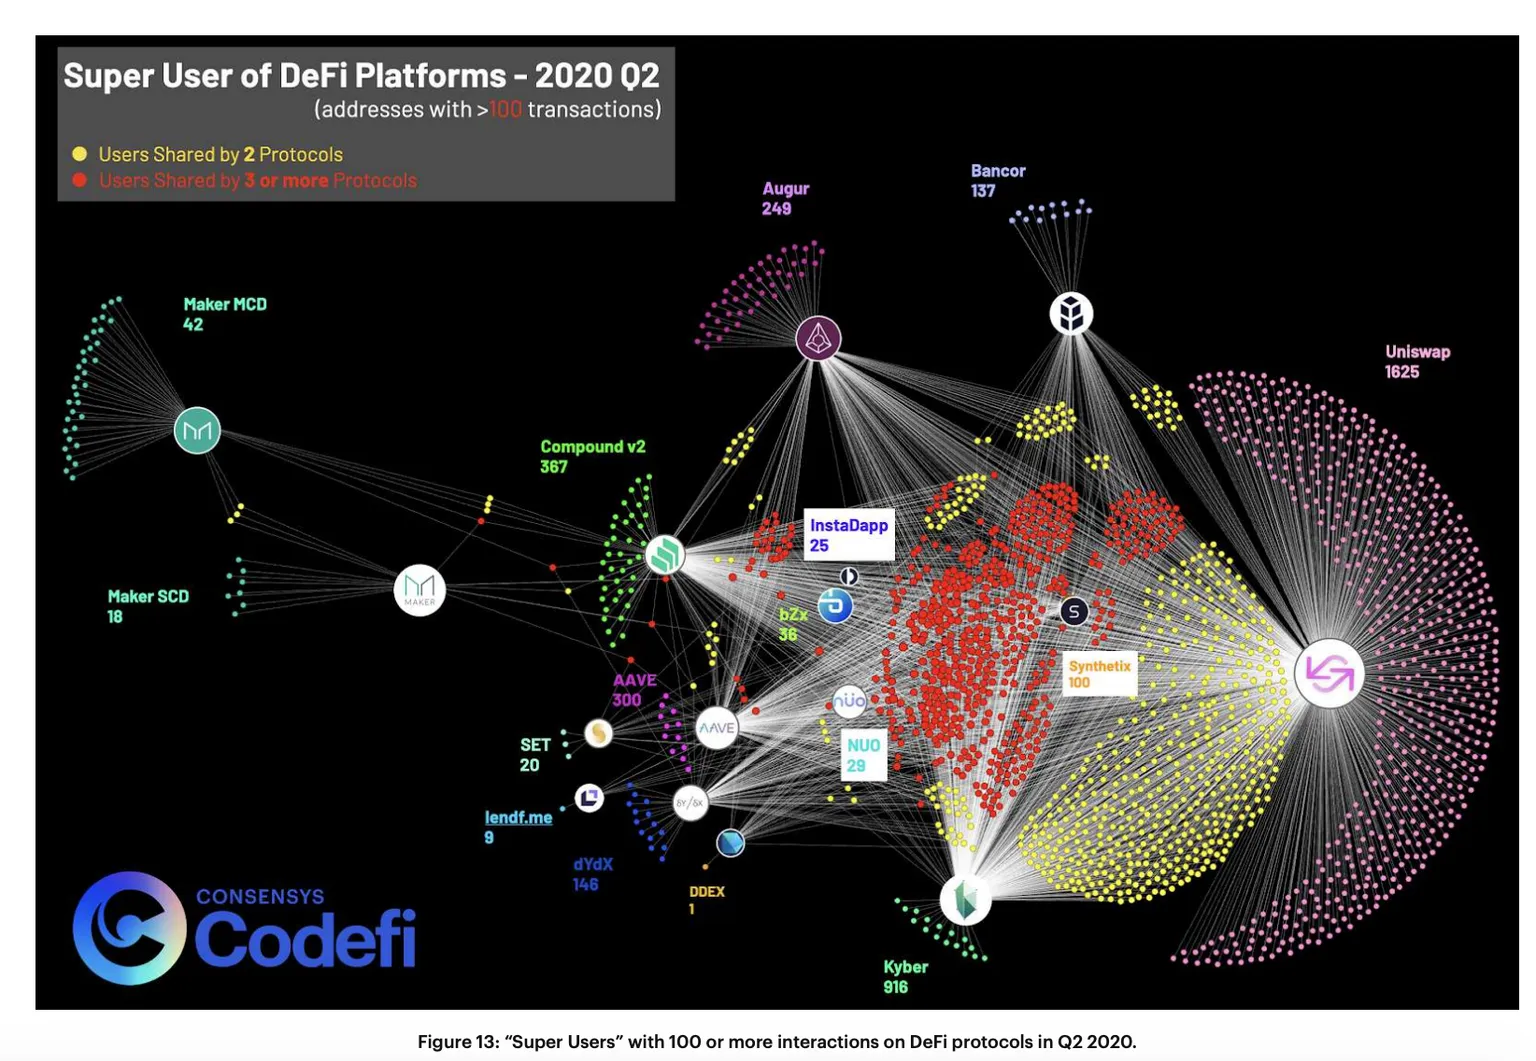 Super users of DeFi platforms. Source: ConsenSys Codefi